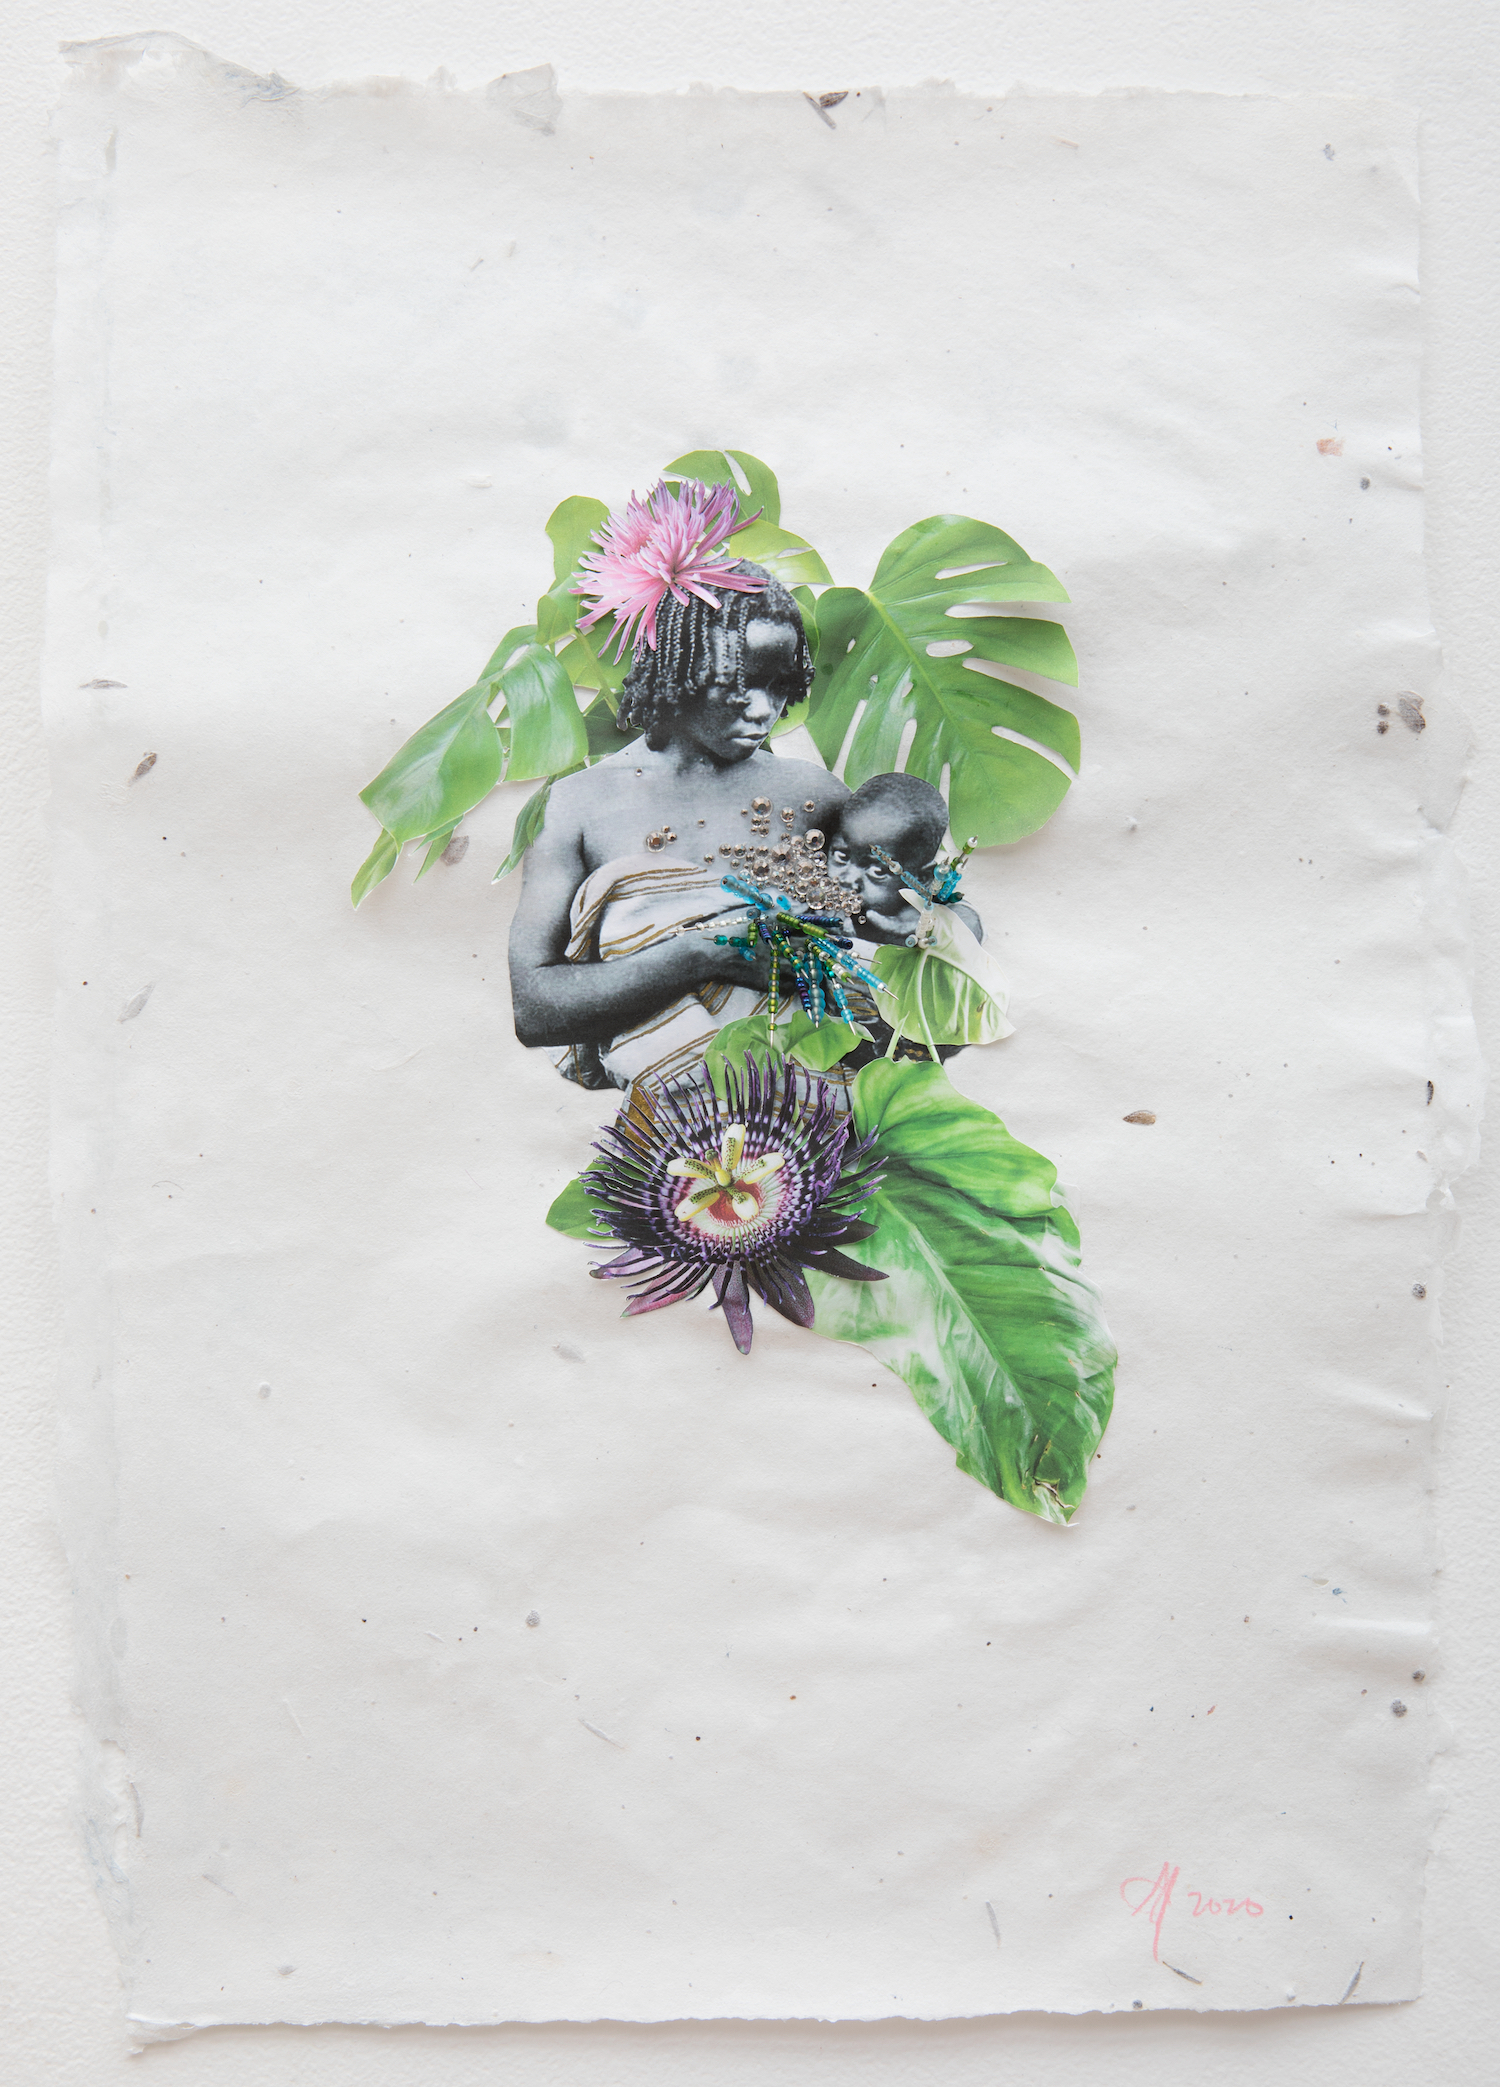 Colostrum, 2020 - 16” x 20” - Collage, rhinestones, glass beads, needles on paper